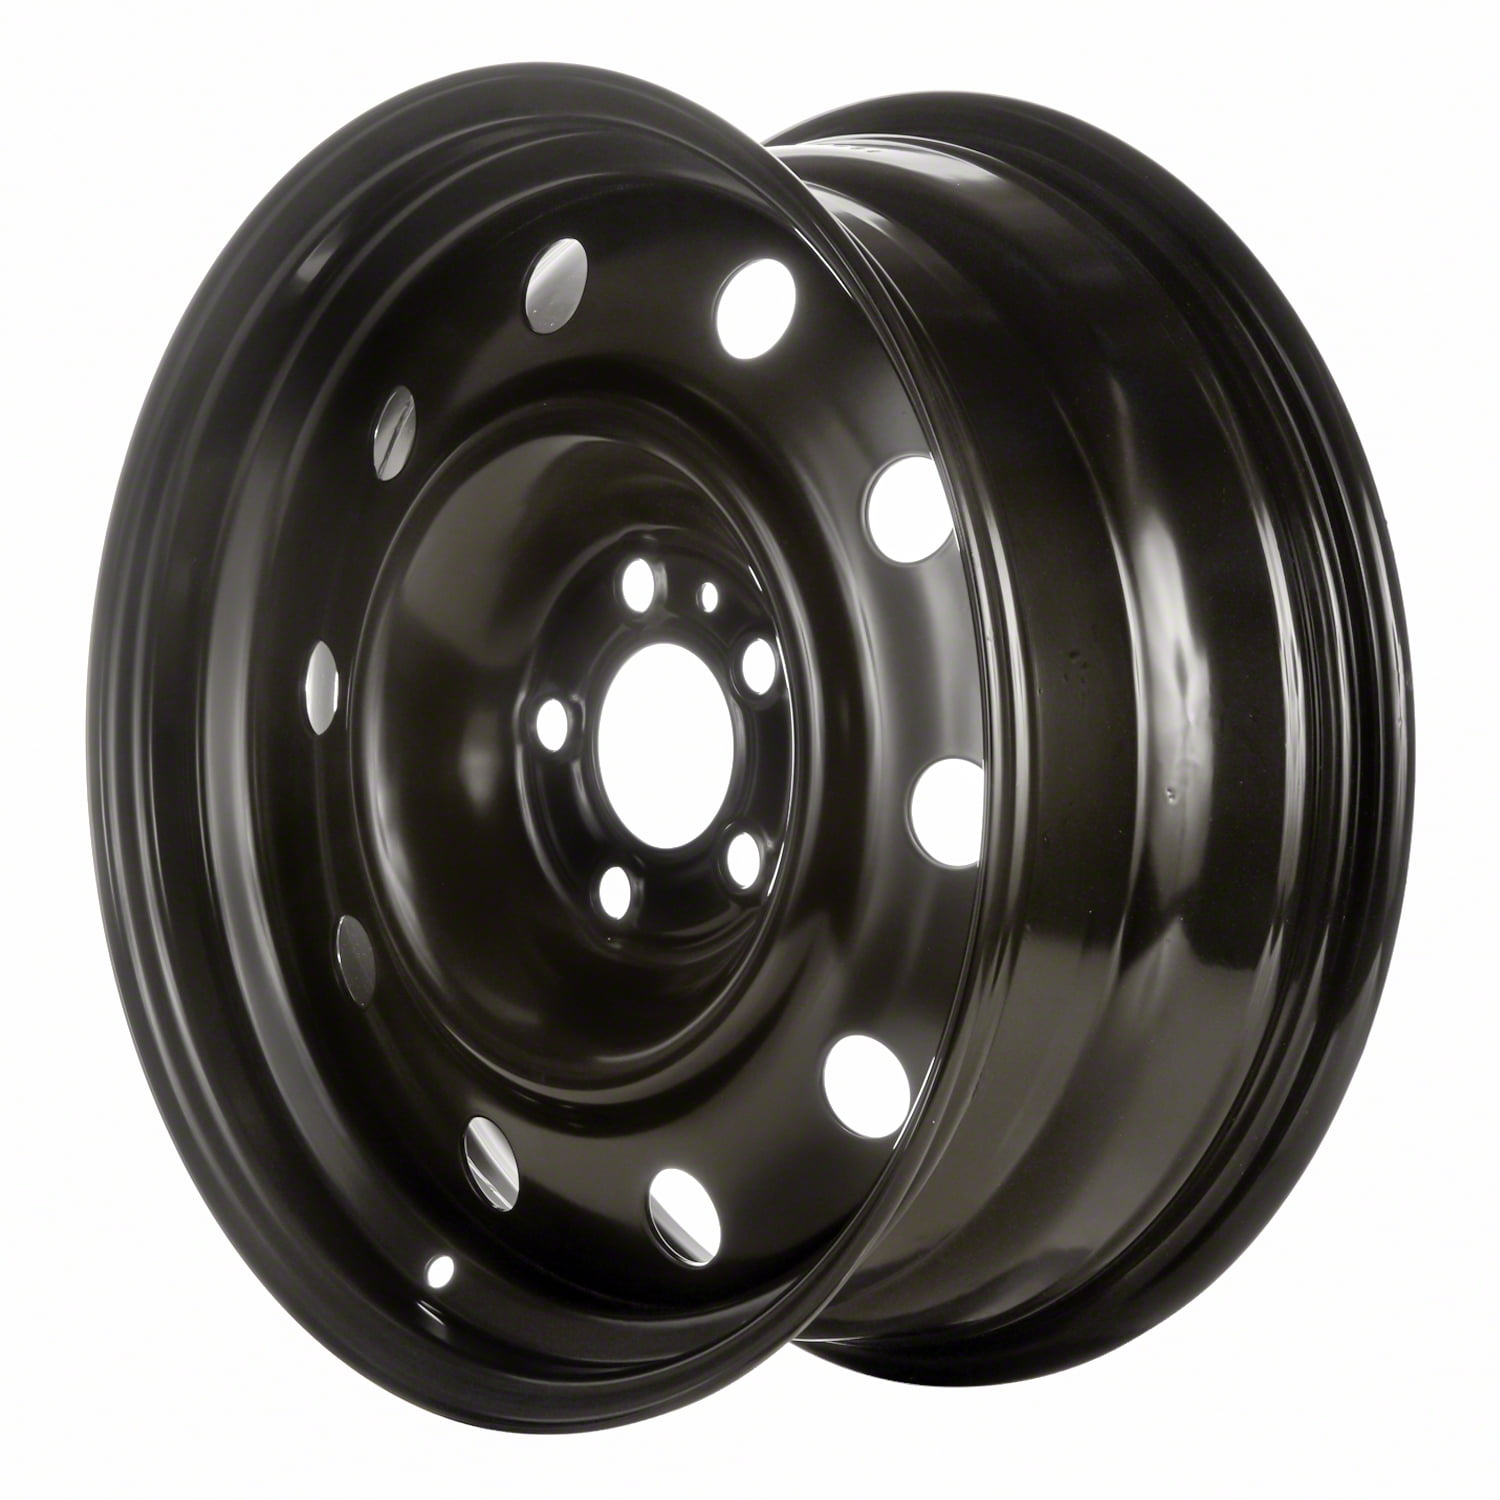 Replacement Steel Wheel Rim 15x5.5 Inch Fits Toyota Yaris 06-12 Kia Rio 12-16 